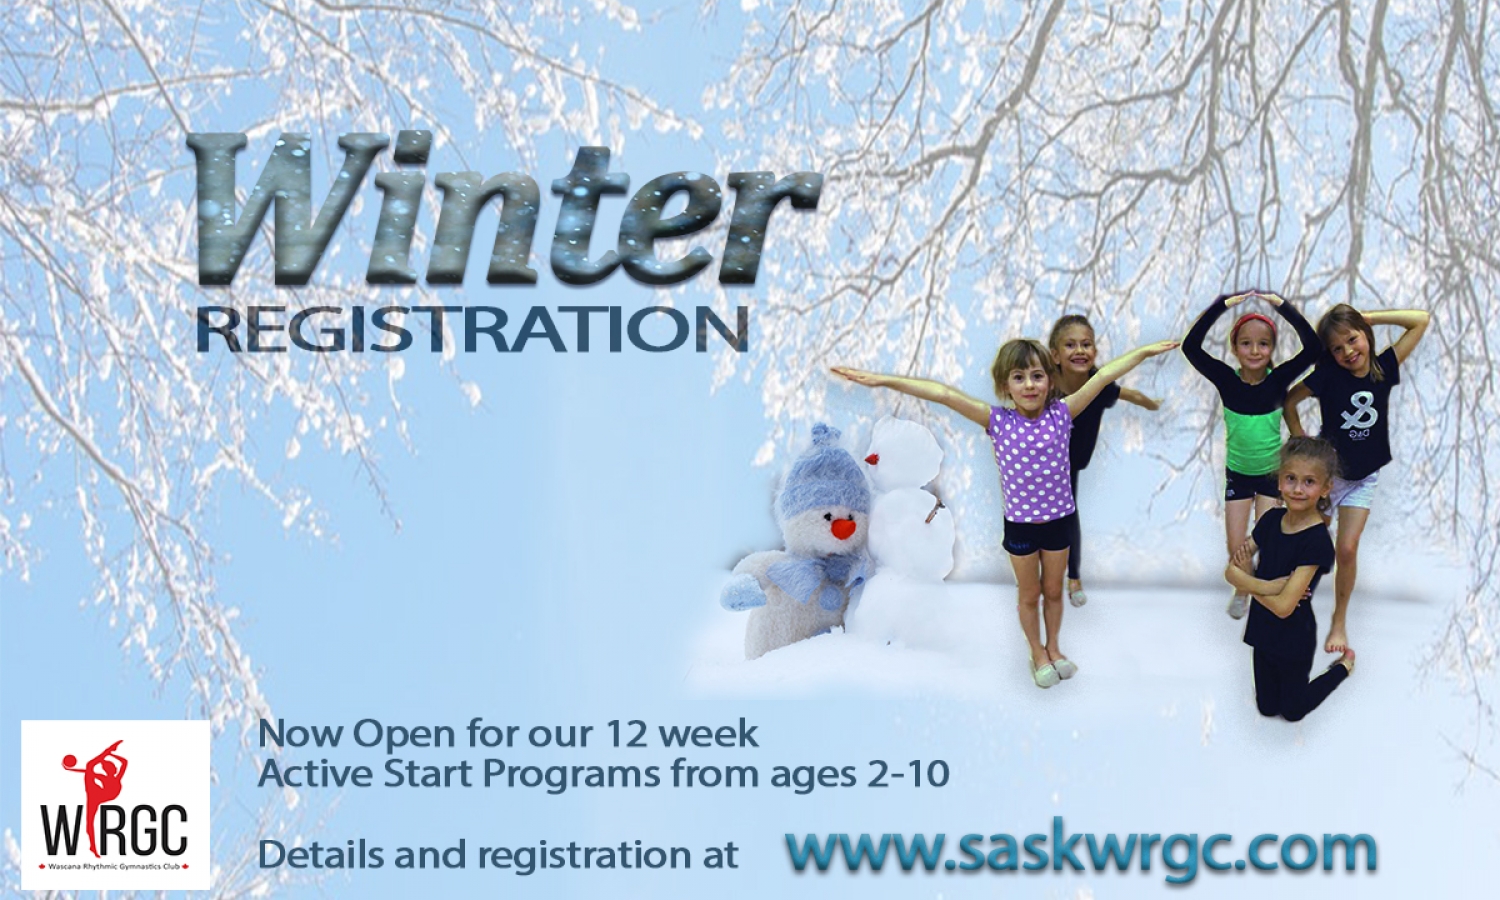 Winter Registration is Now Open for Active Start Programs